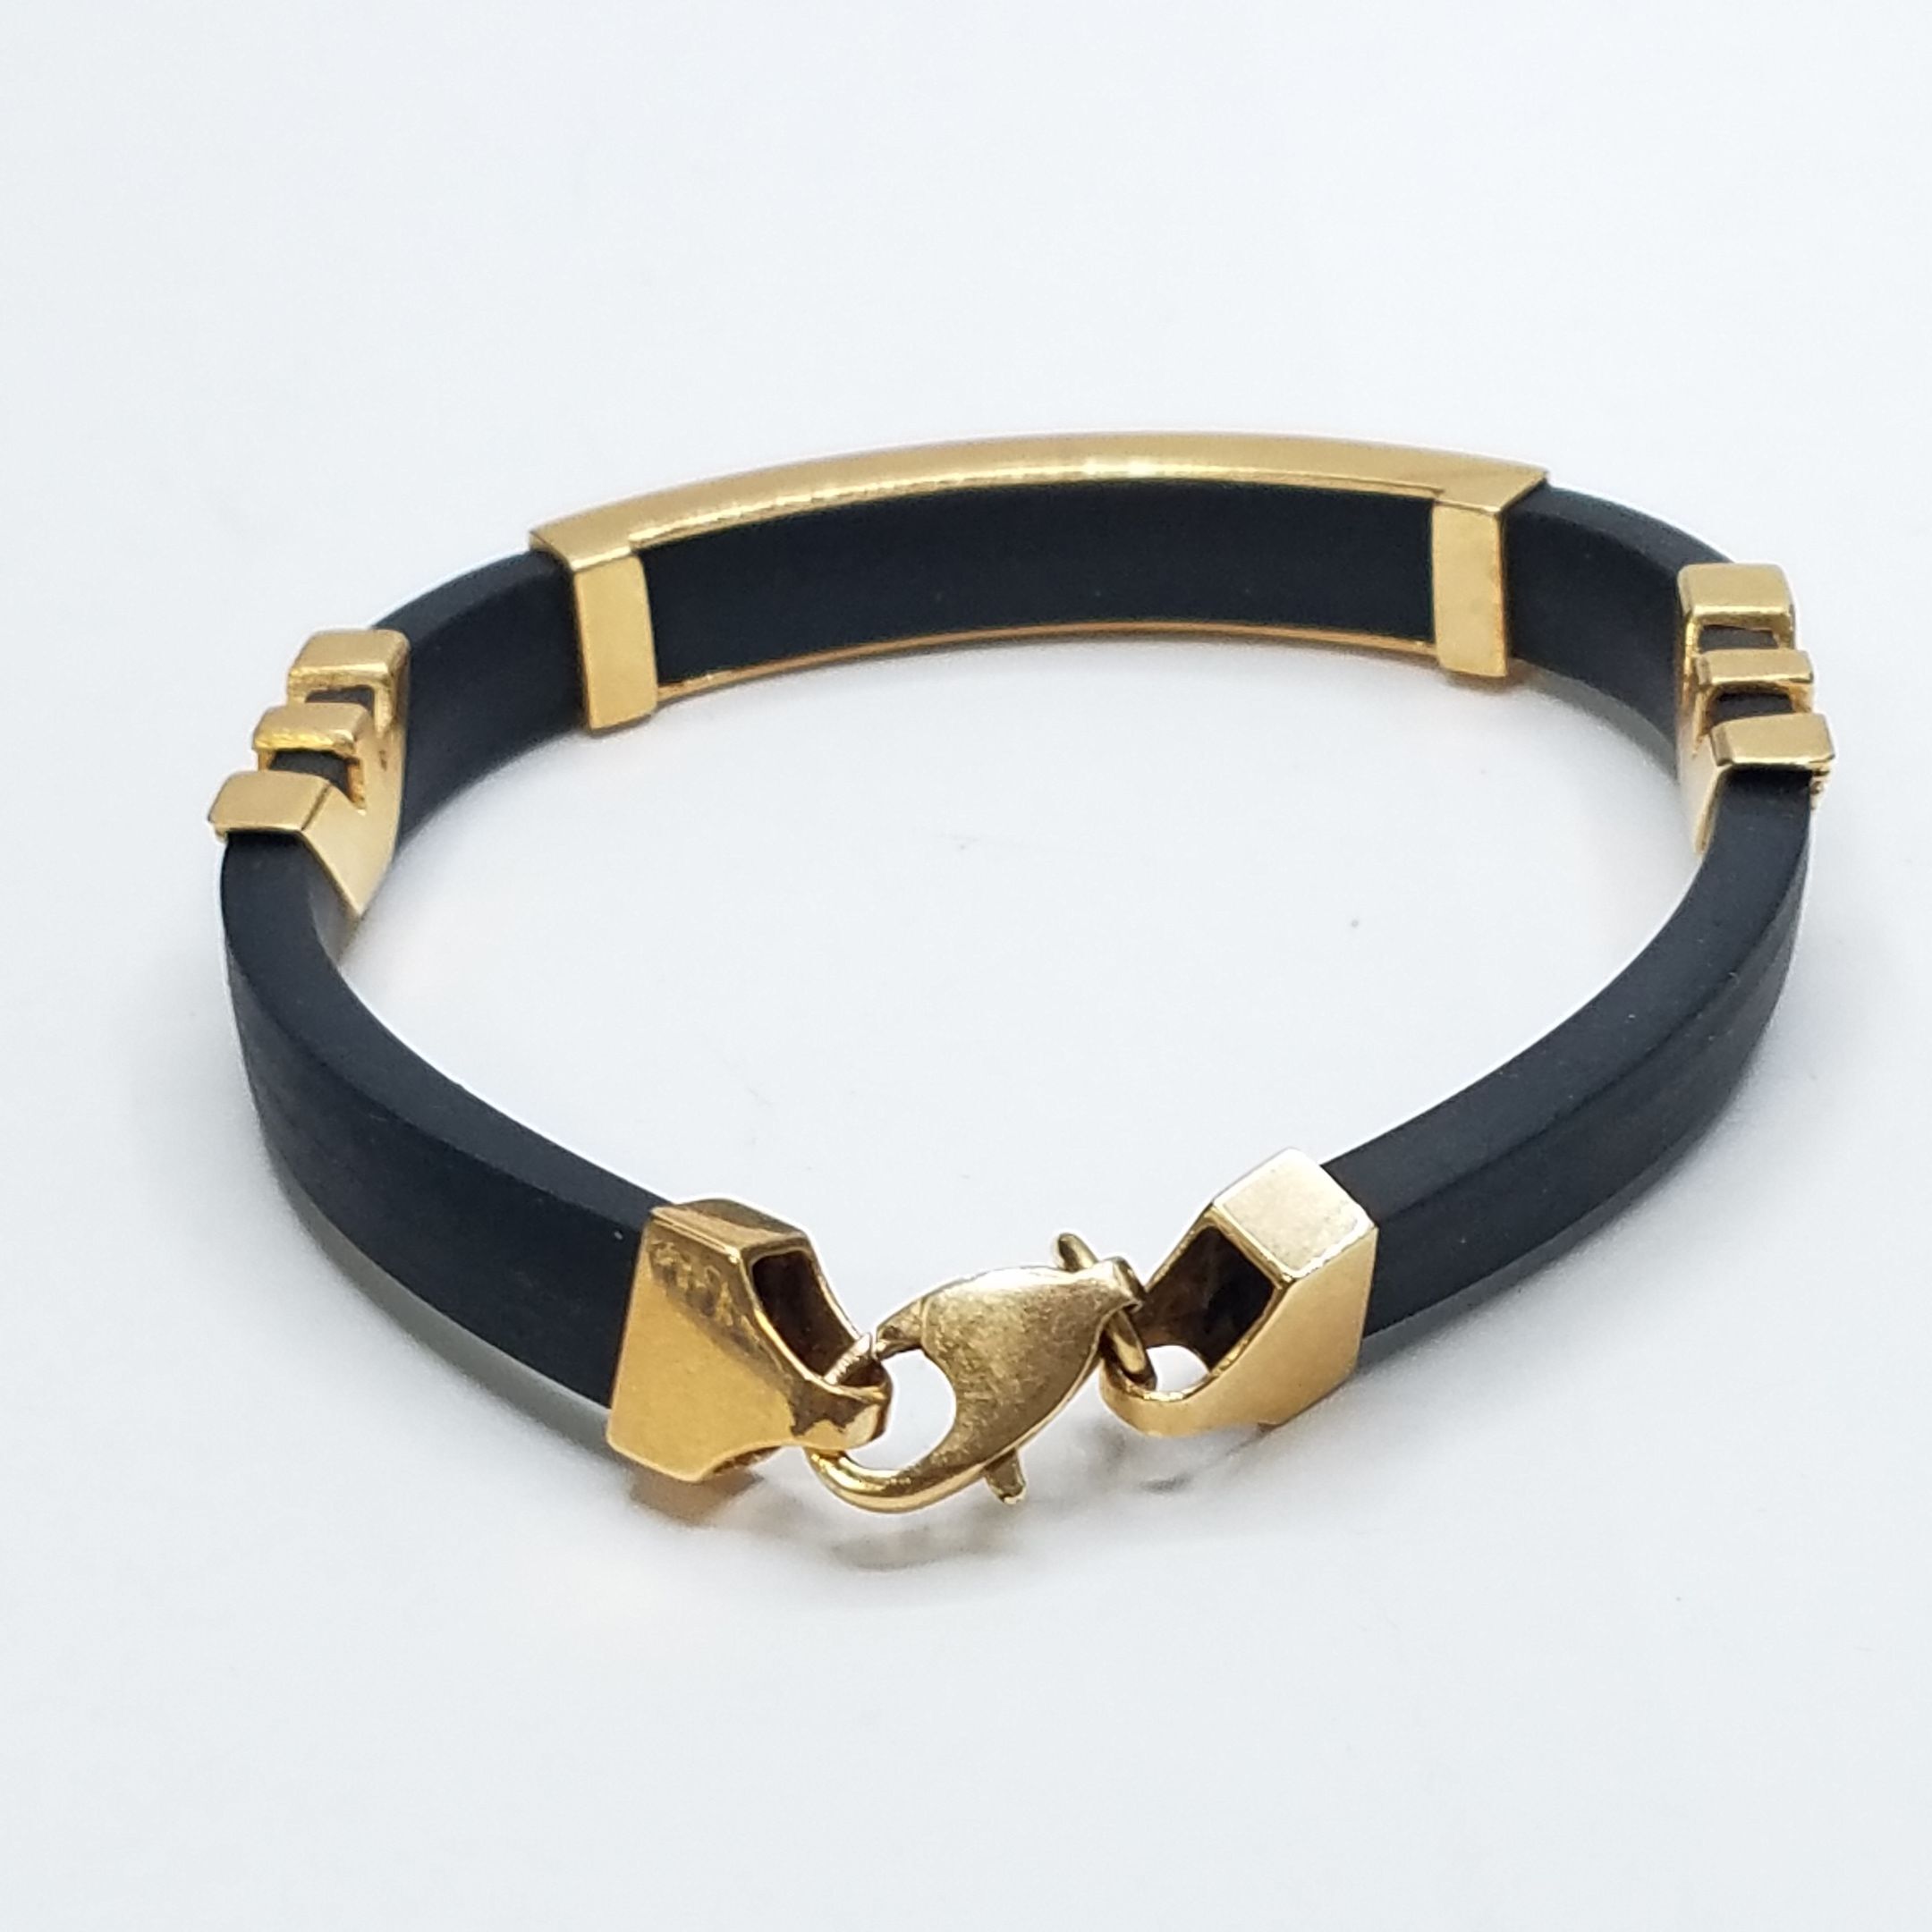 ZIVOM Stainless Steel Rubber Gold Black ID Wrist Band Bracelet For Men